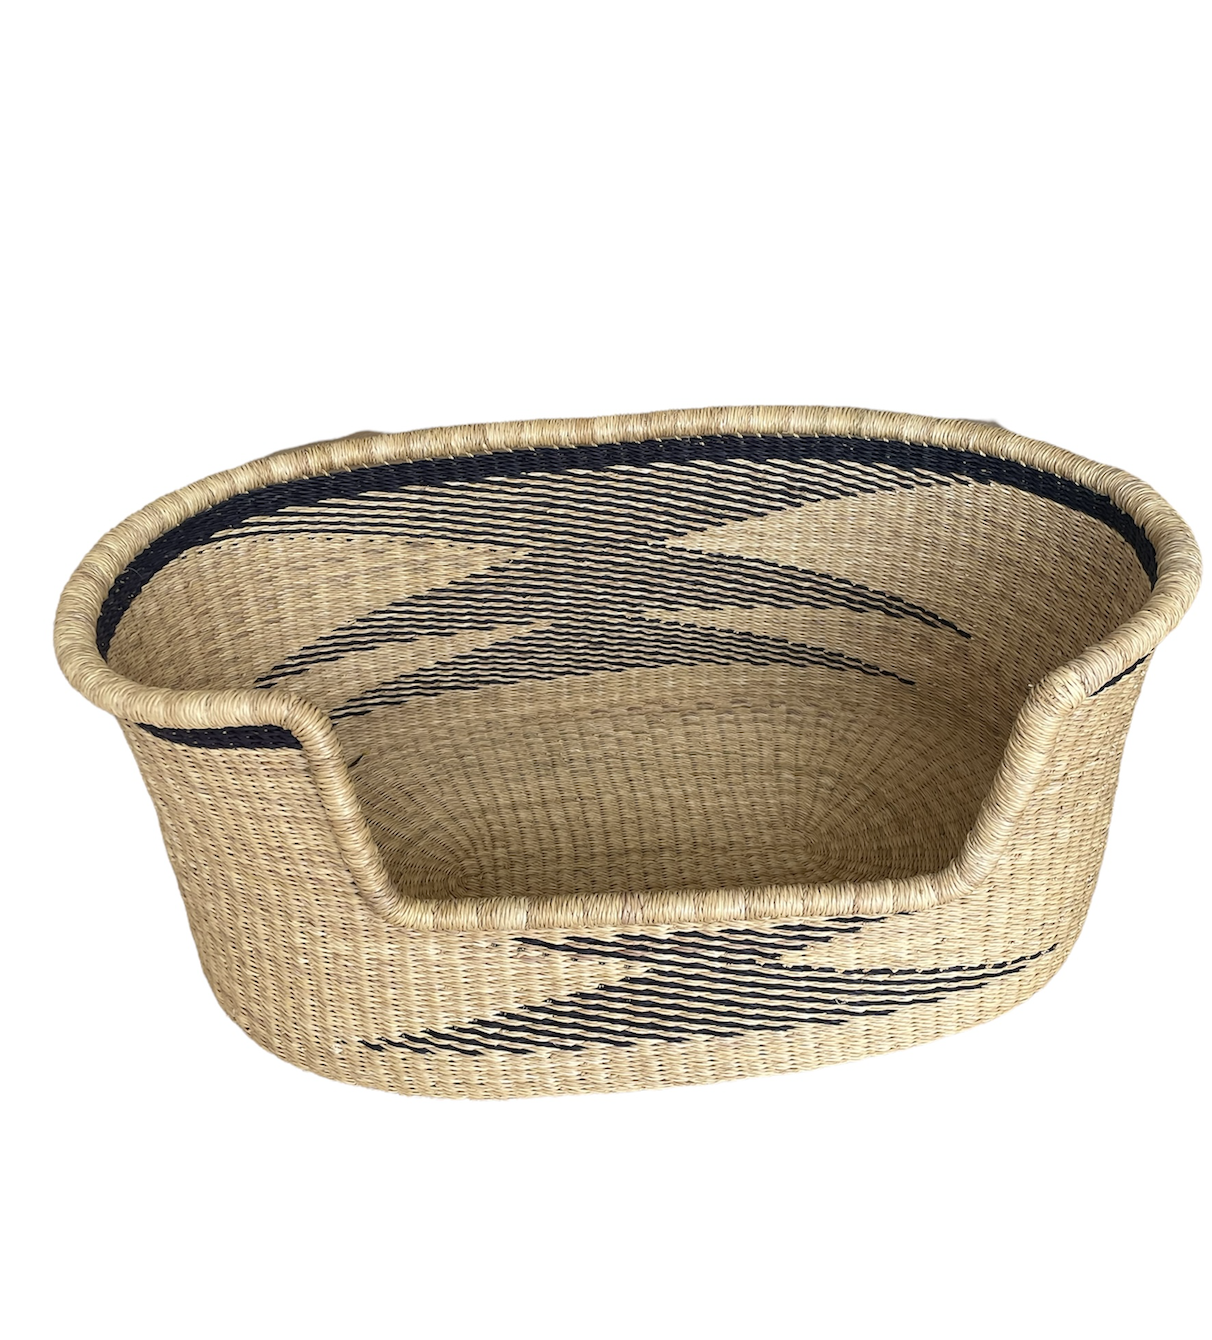 Hand-woven dog basket no. 1